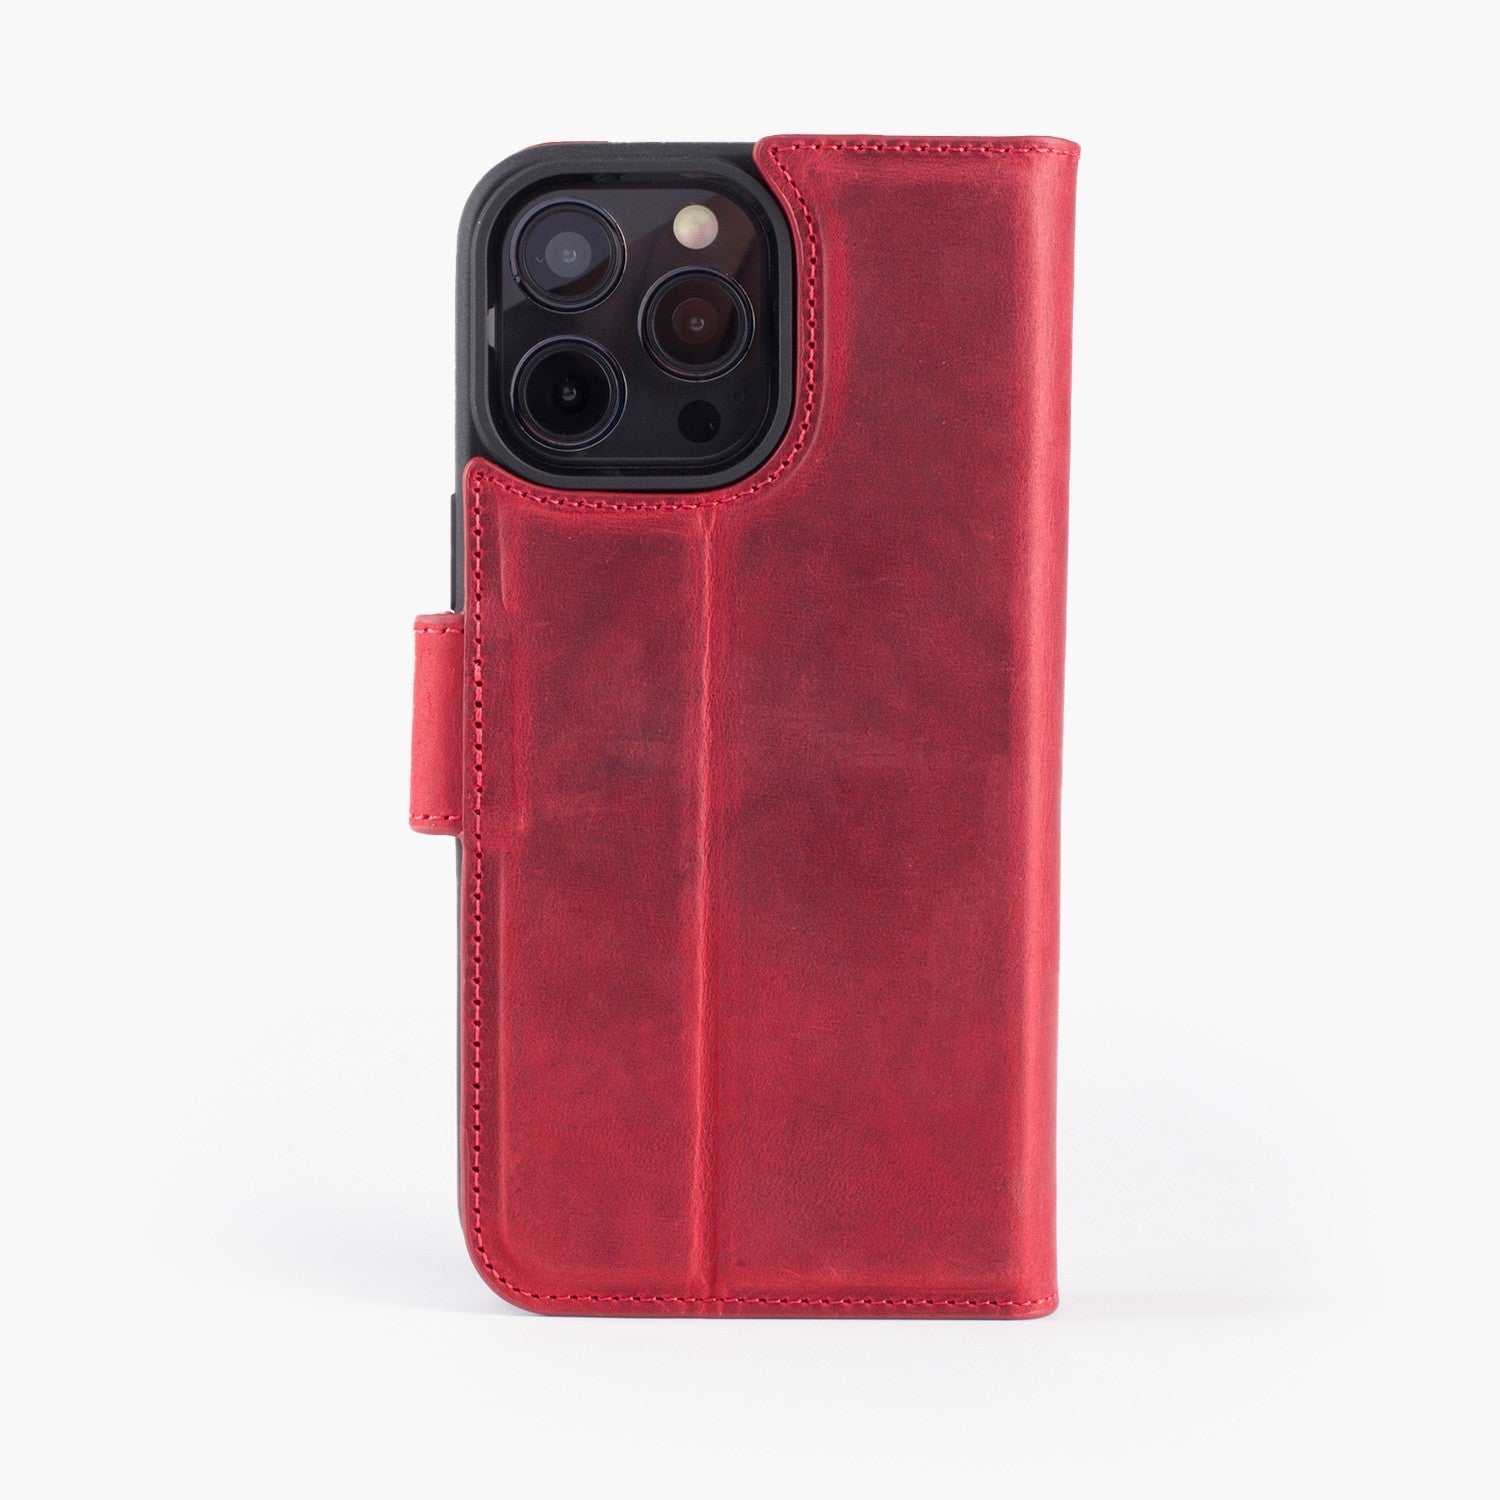 Wachikopa leather Magic Book Case 2 in 1 for iPhone 12 Mini Red